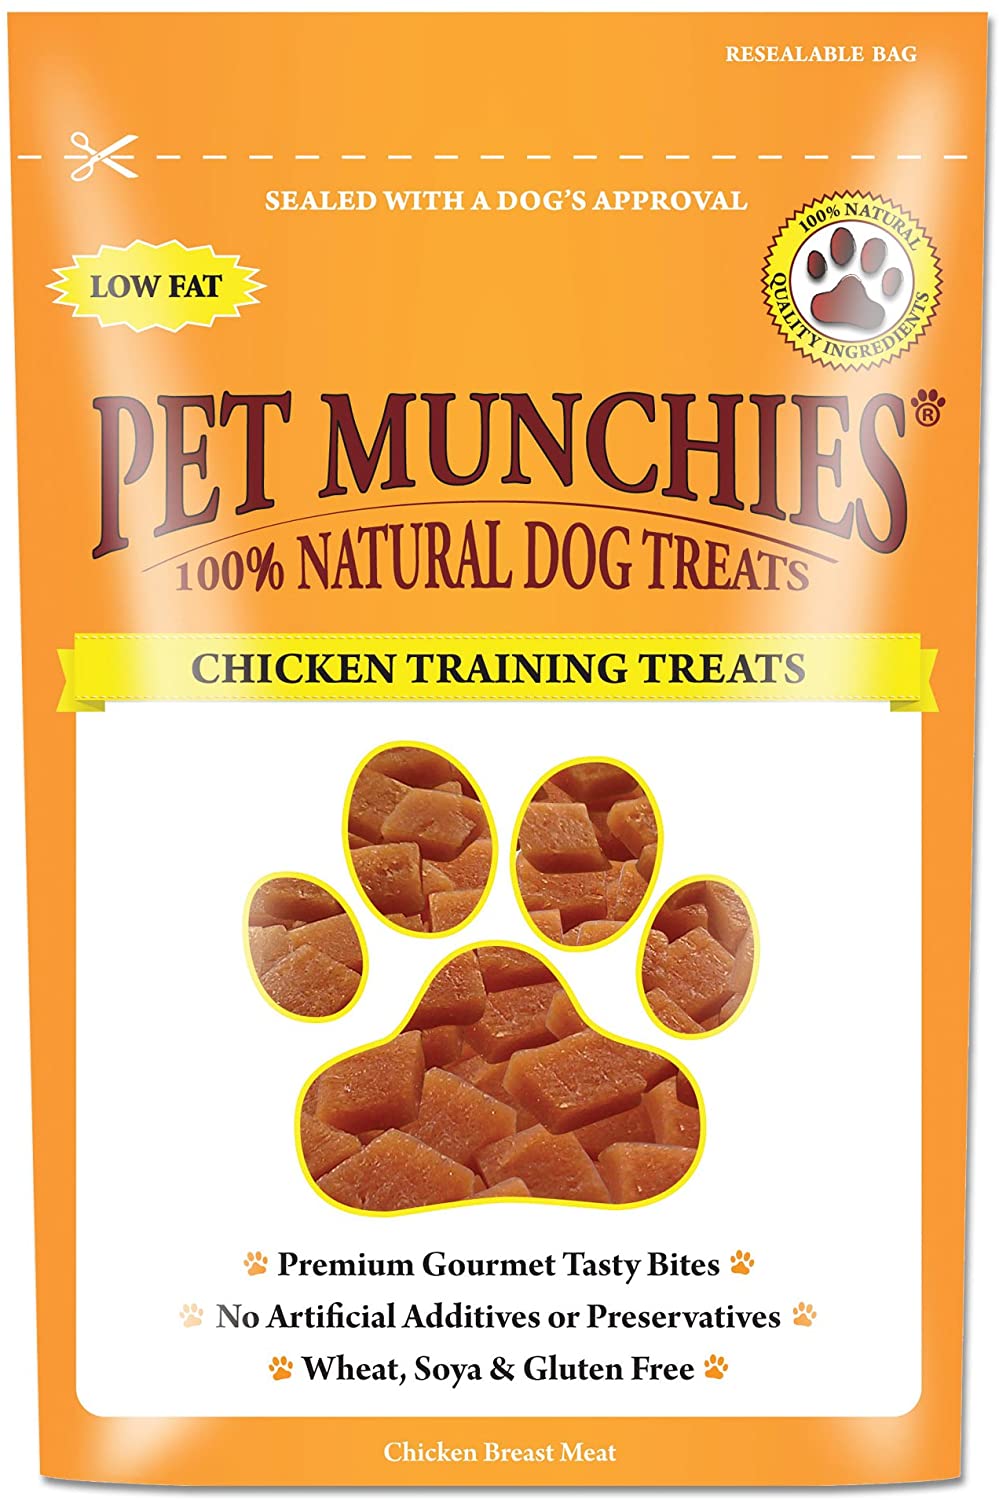  PET MUNCHIES - Paquete de 8 Bolsas de chucherías de Pato para Mascotas, recompensa para adiestramiento. 